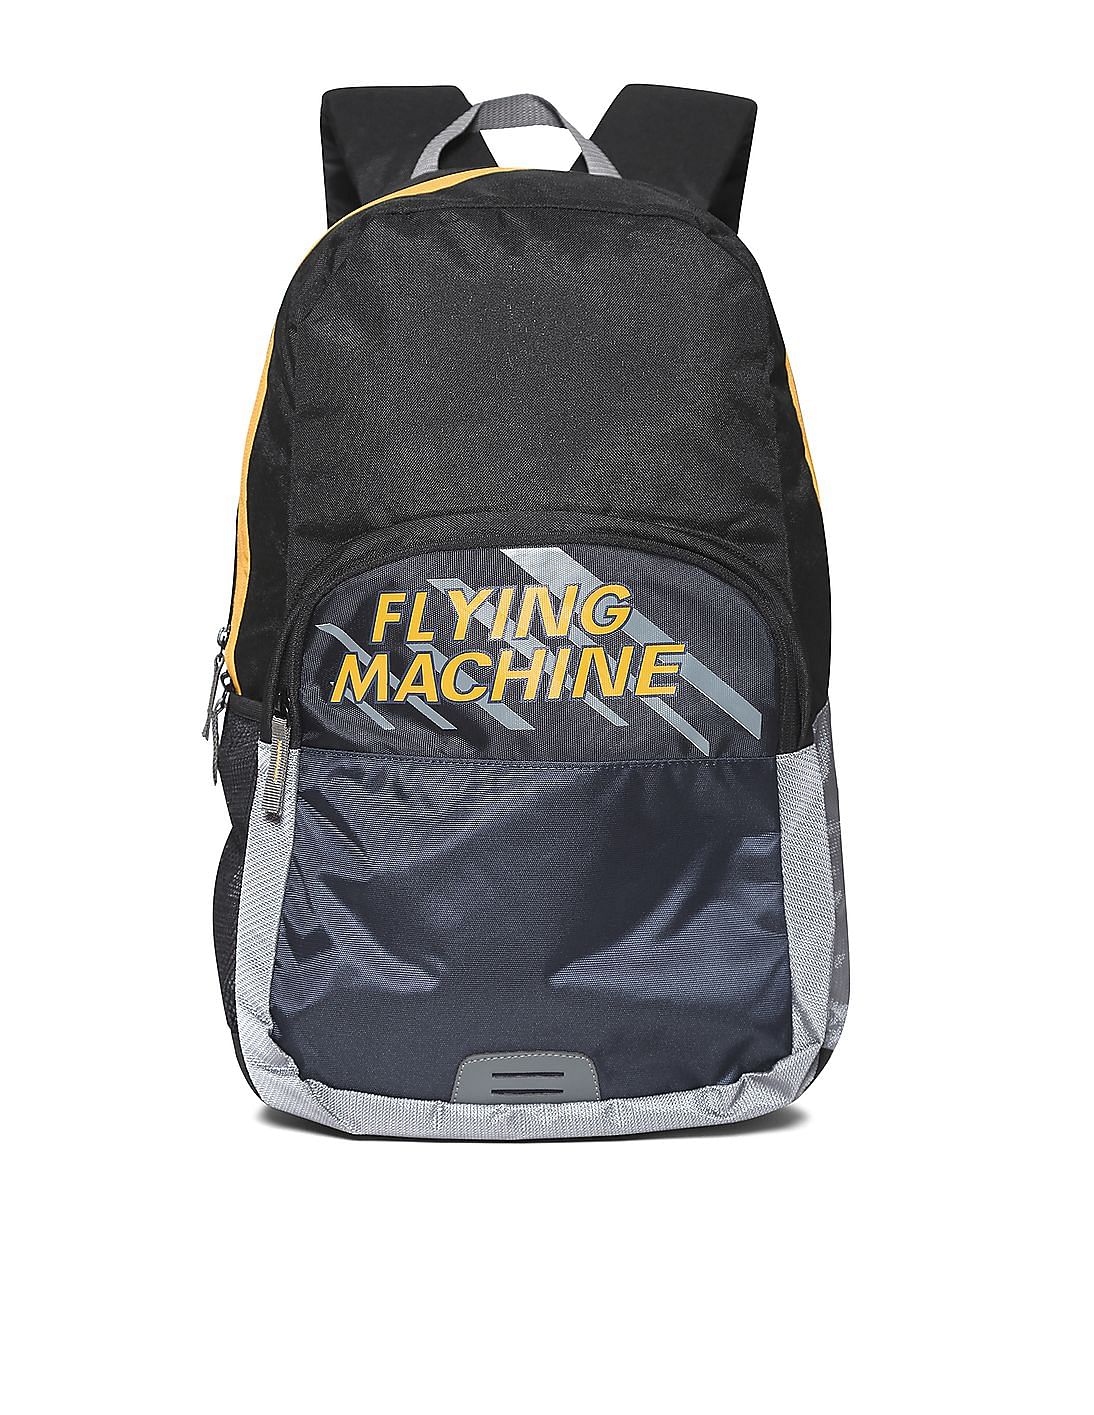 FLYING MACHINE Contrast Printed Backpack